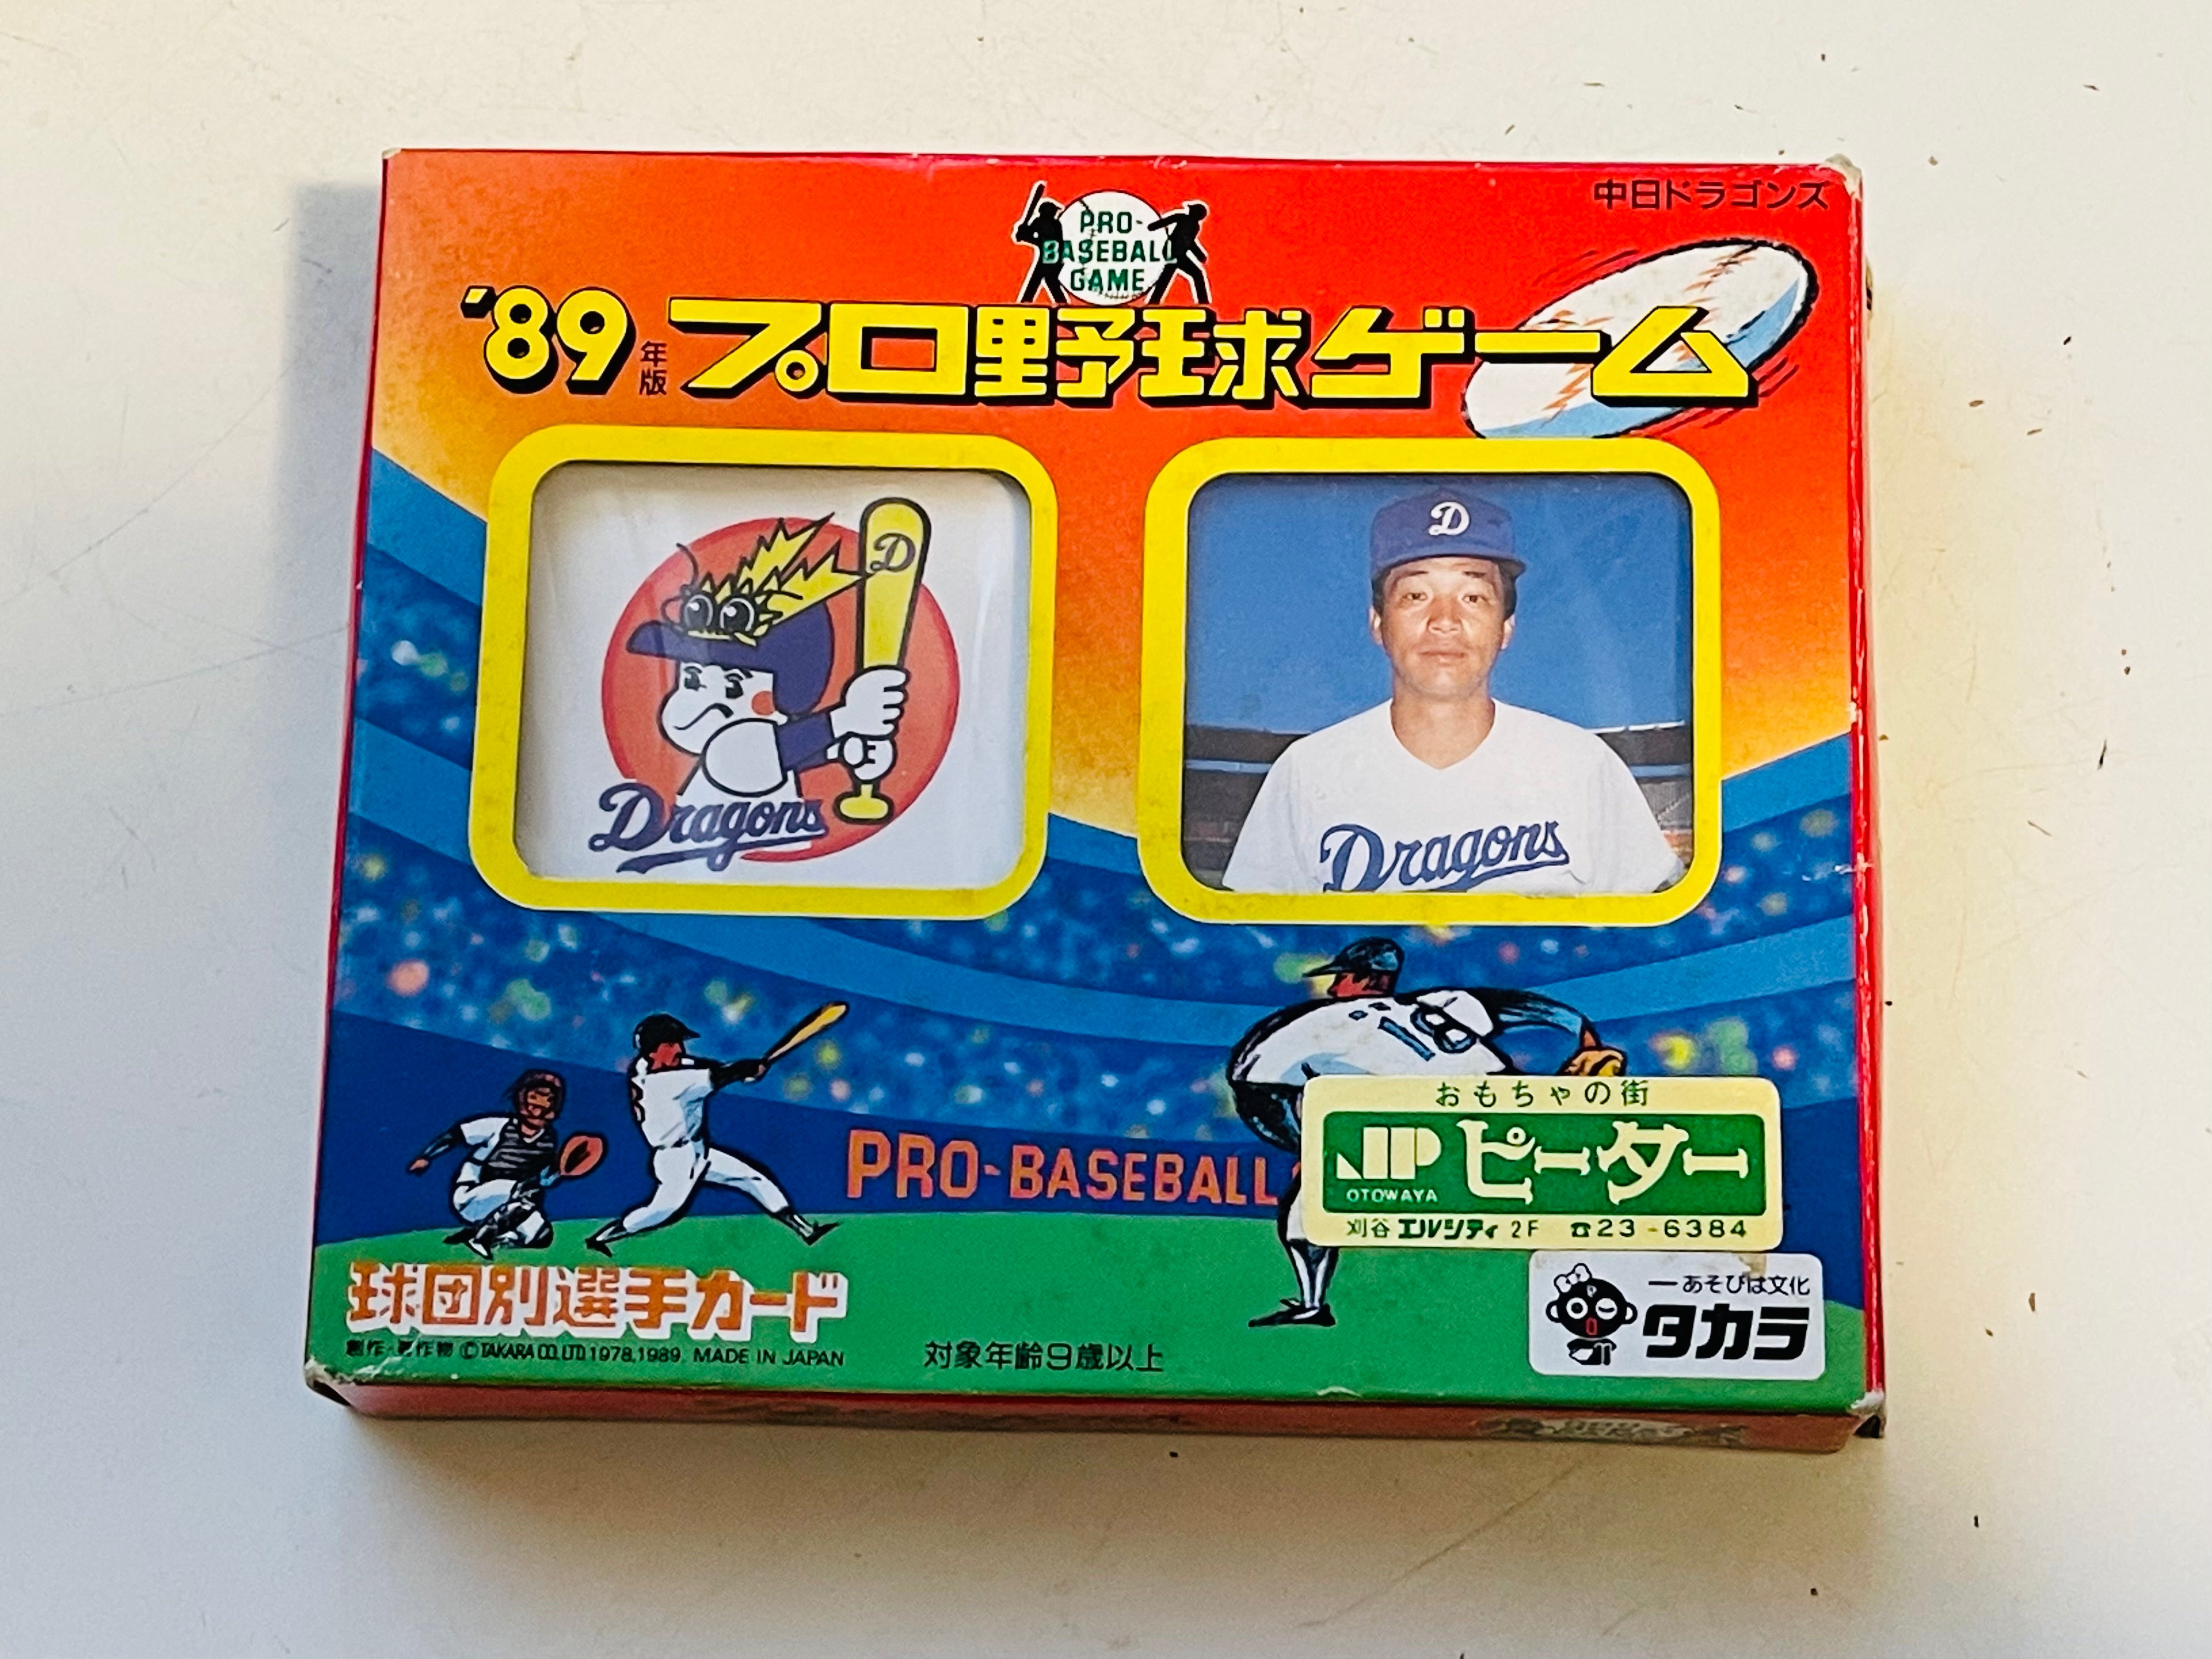 1989 Pro baseball Dragons Takara baseball cards in box